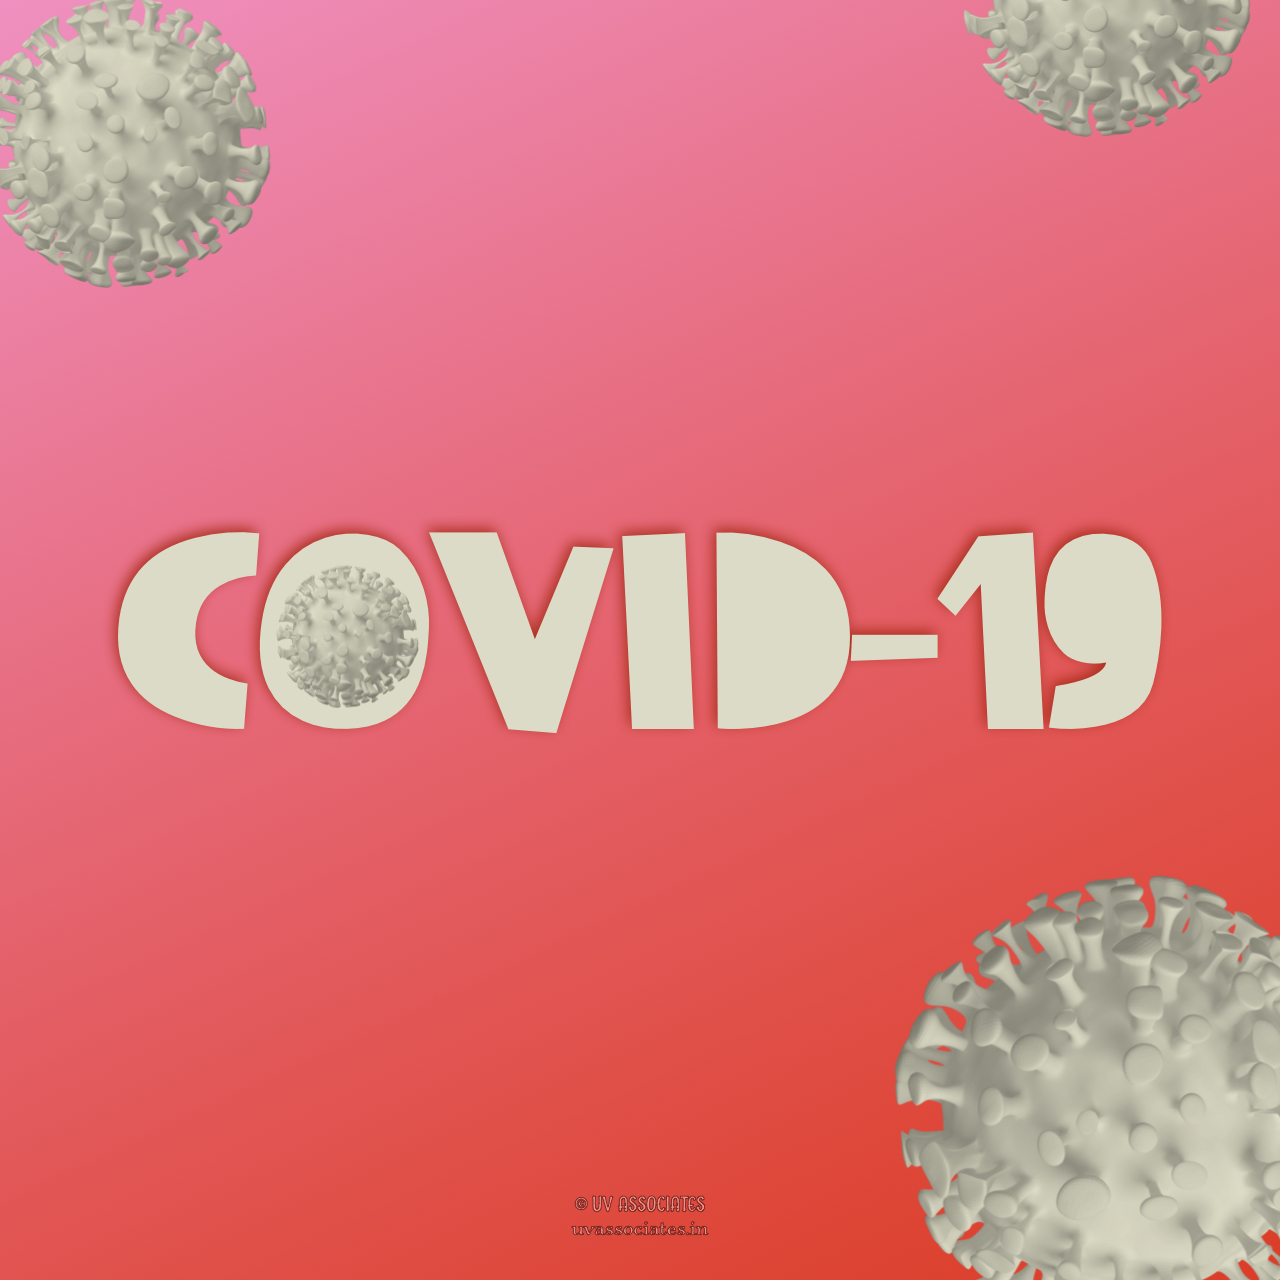 Covid-19 Images - Gray Coronavirus cells on Gradient background